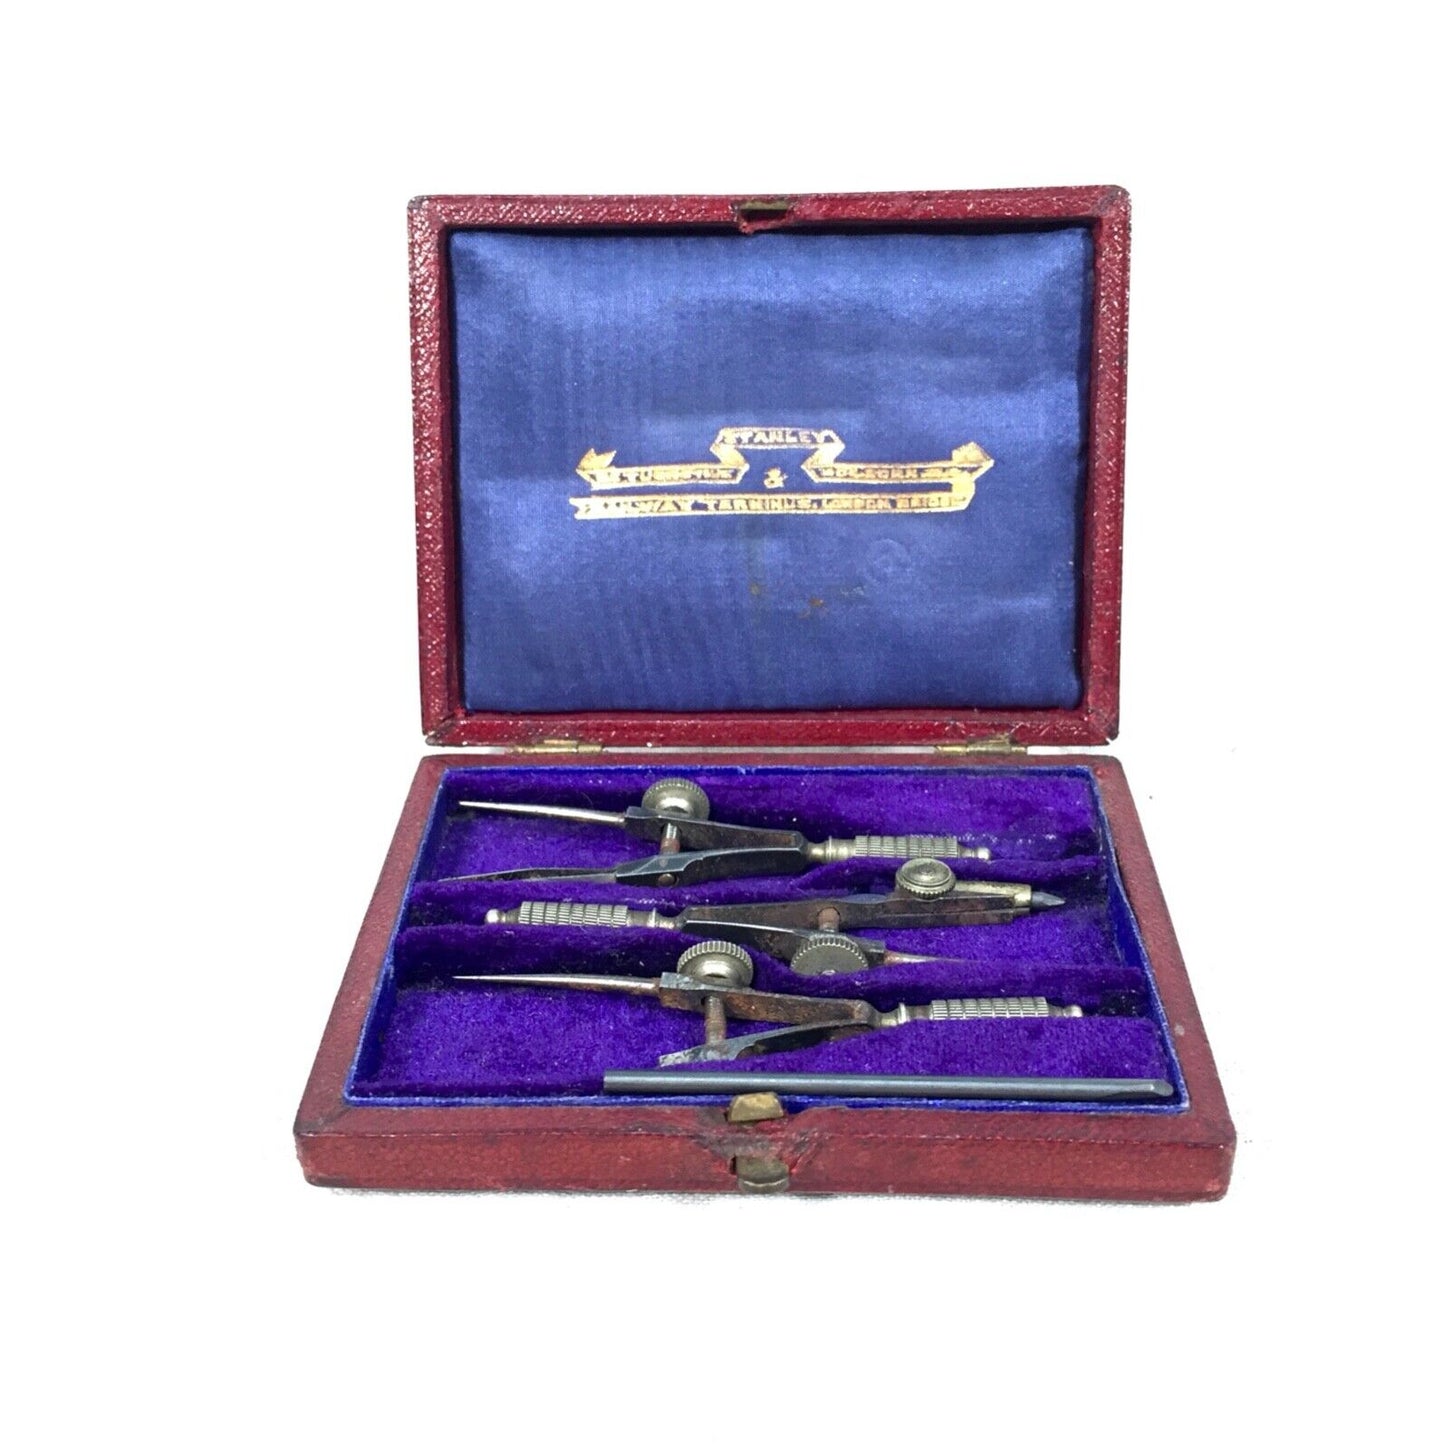 Antique Stanley Technical Drawing Instrument Set / Miniature Pocket Sized / Case